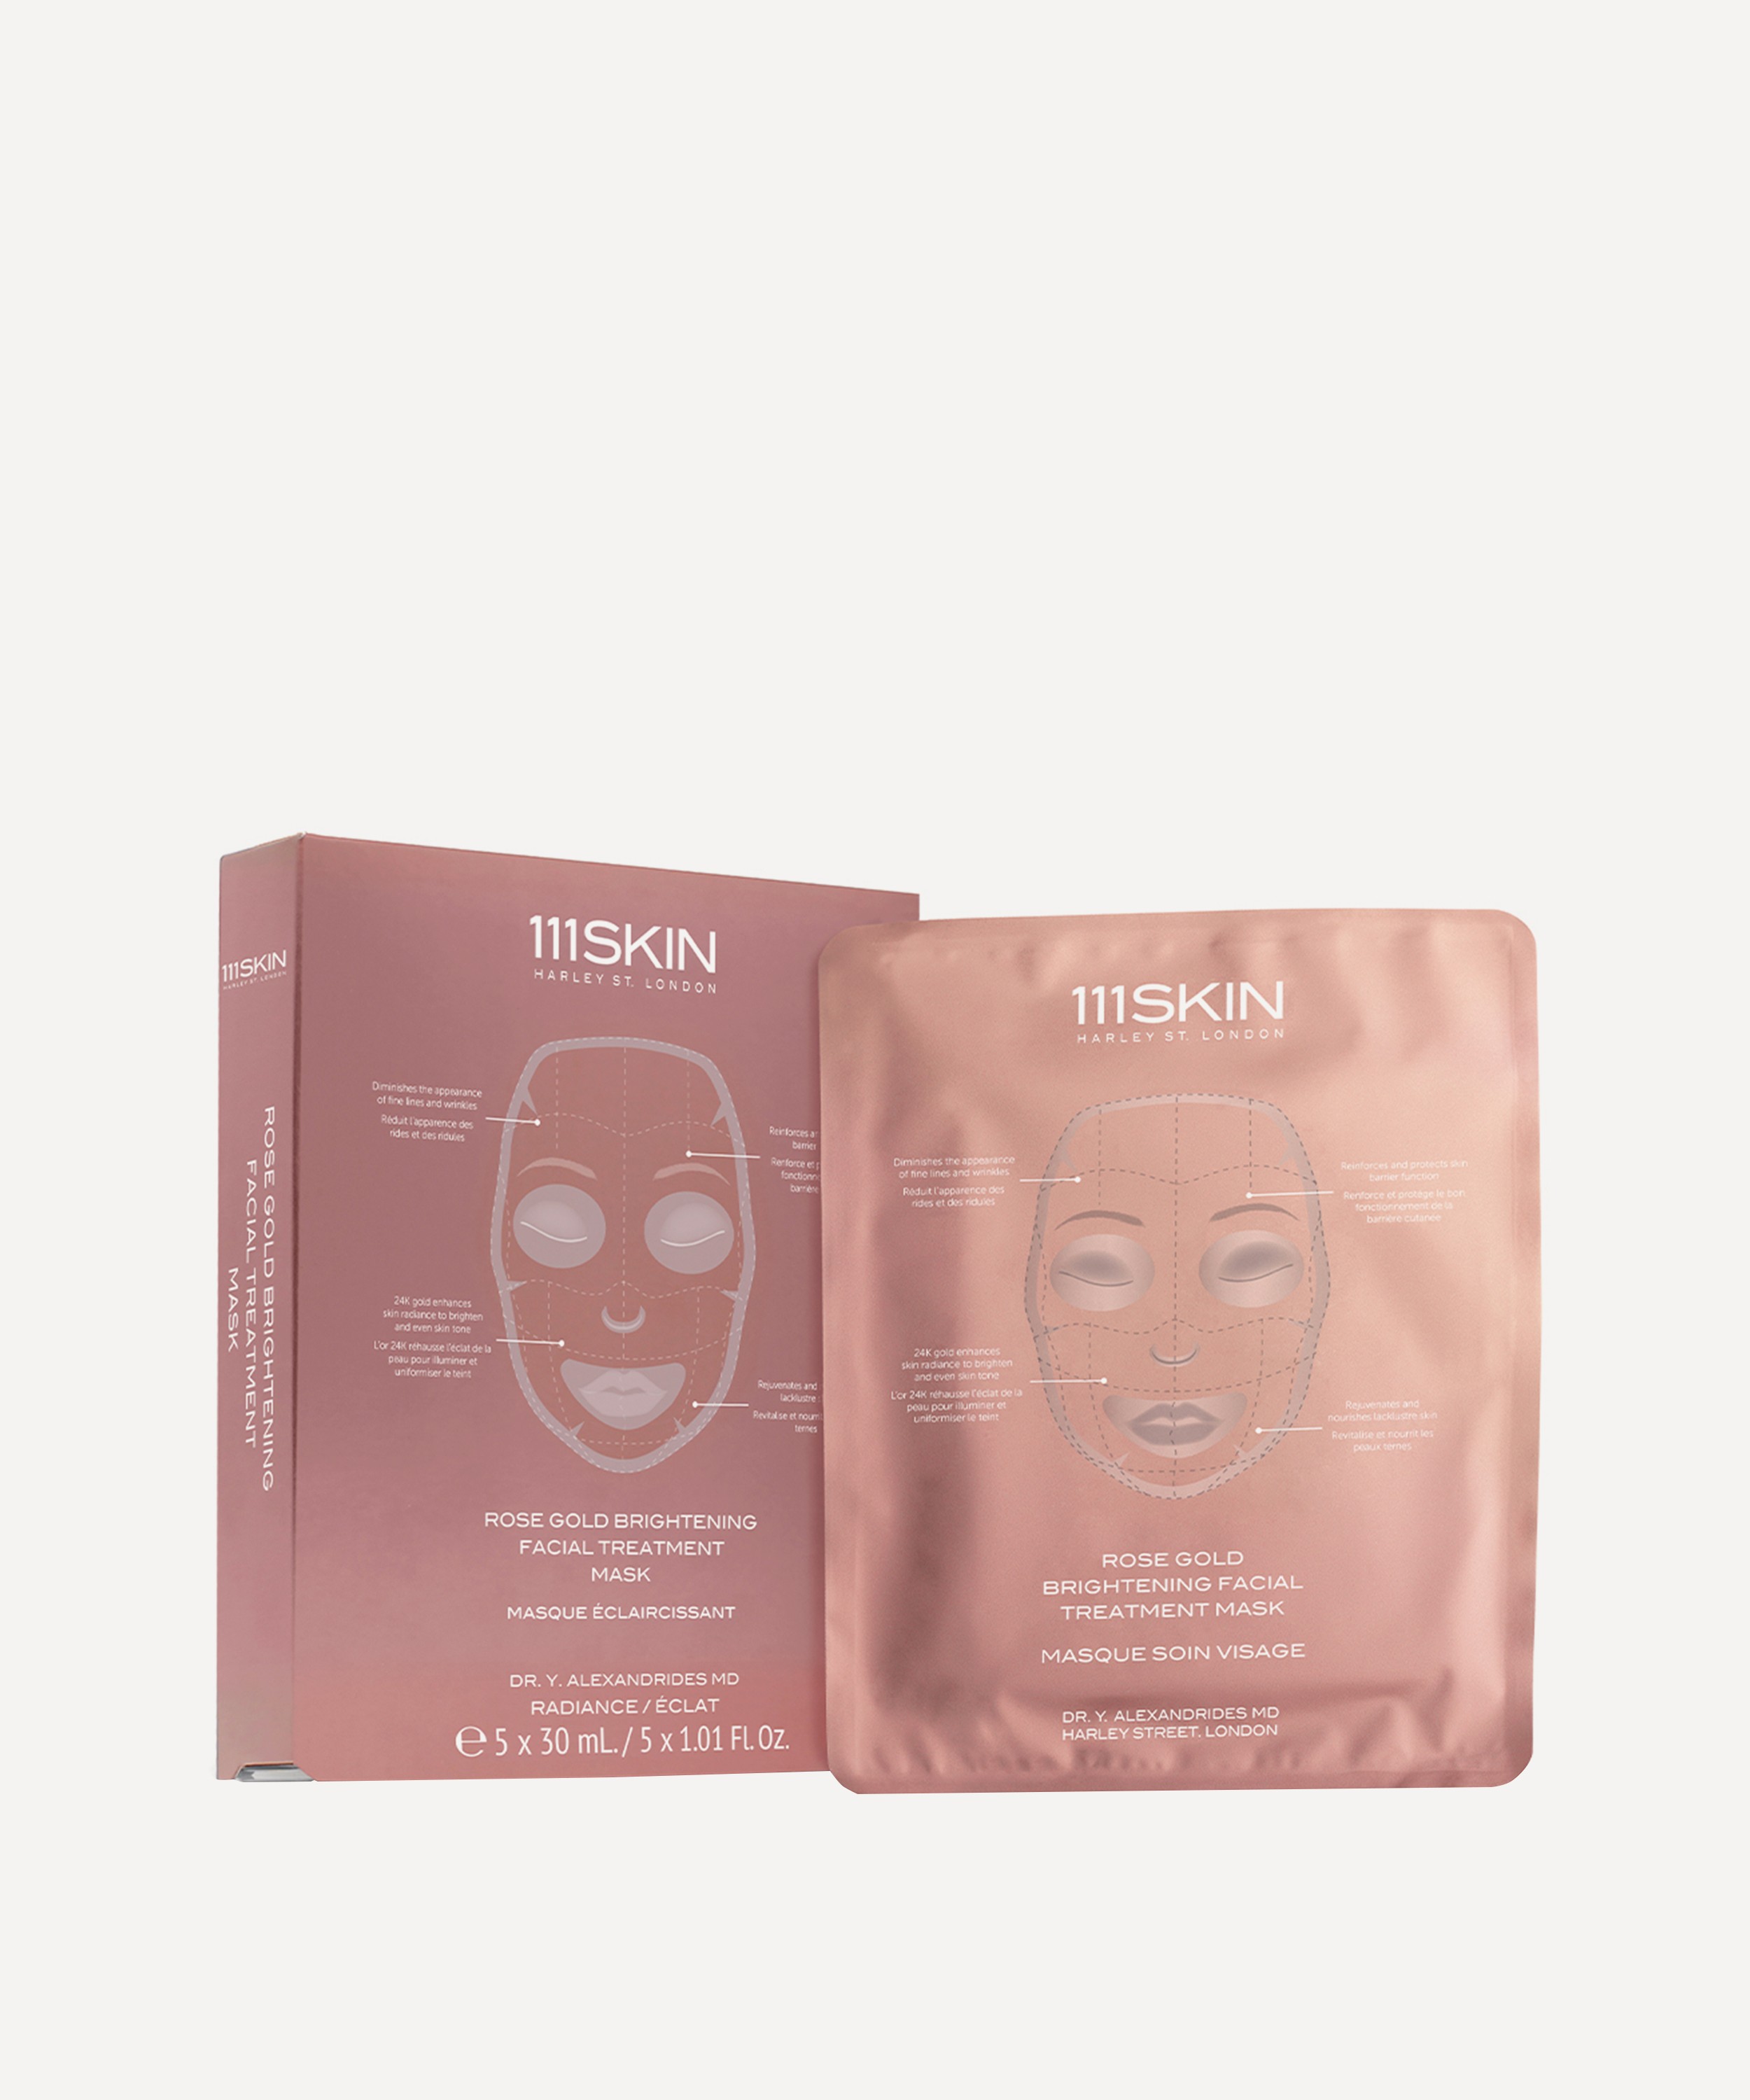 111SKIN - Rose Gold Brightening Facial Treatment Mask 5 x 30ml